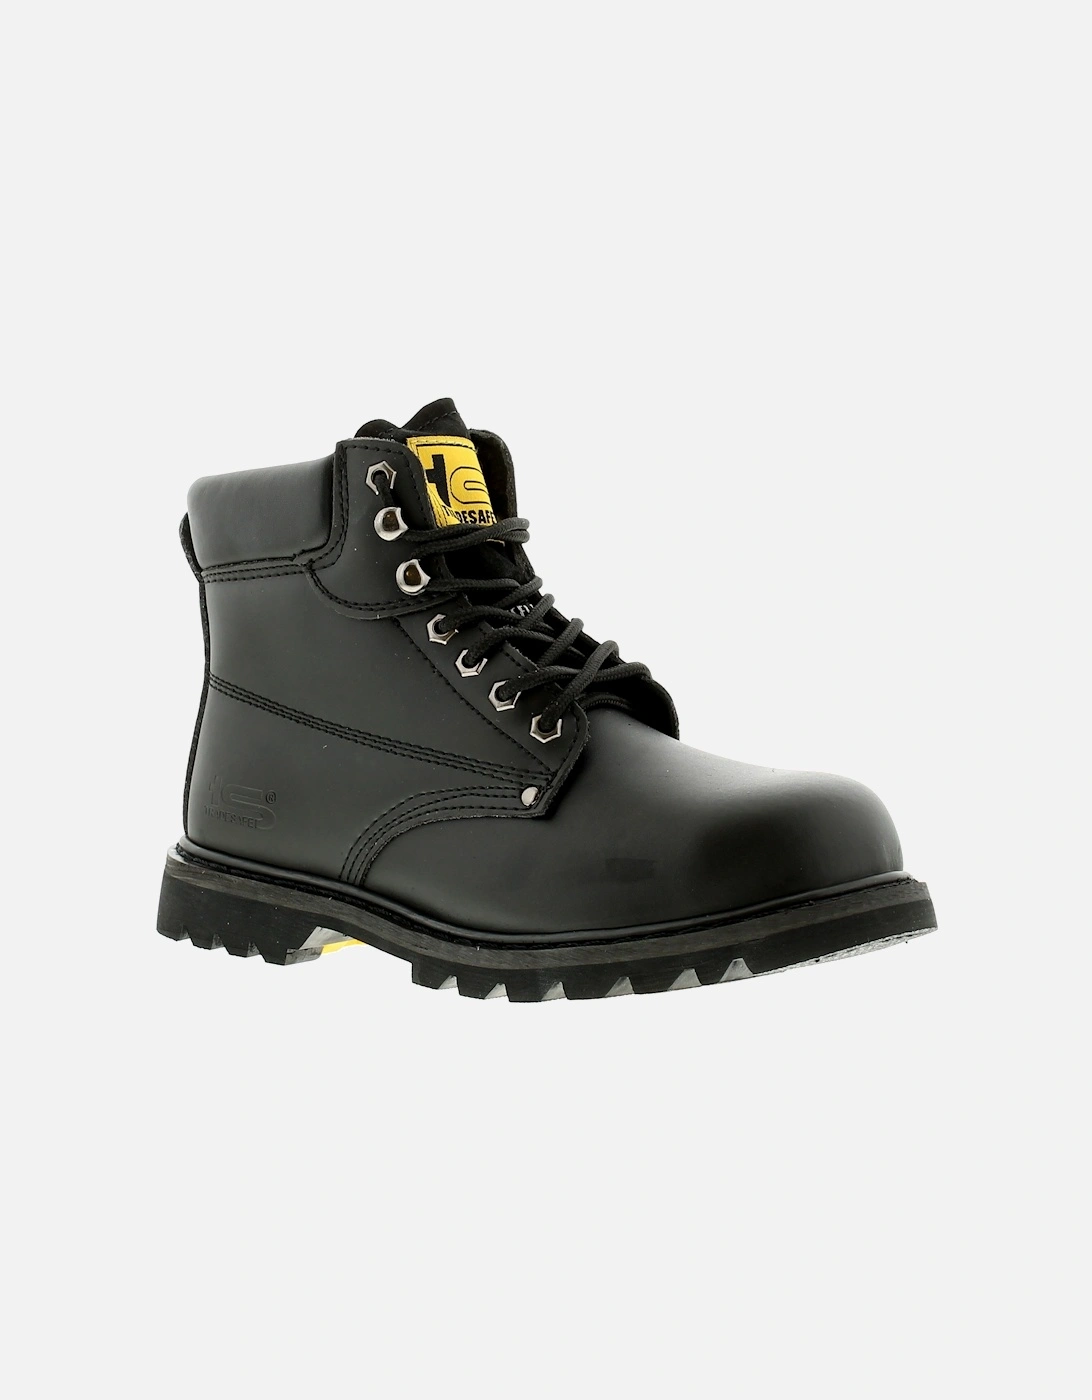 Mens Safety Boots Bulldoze Lace Up black UK Size, 6 of 5